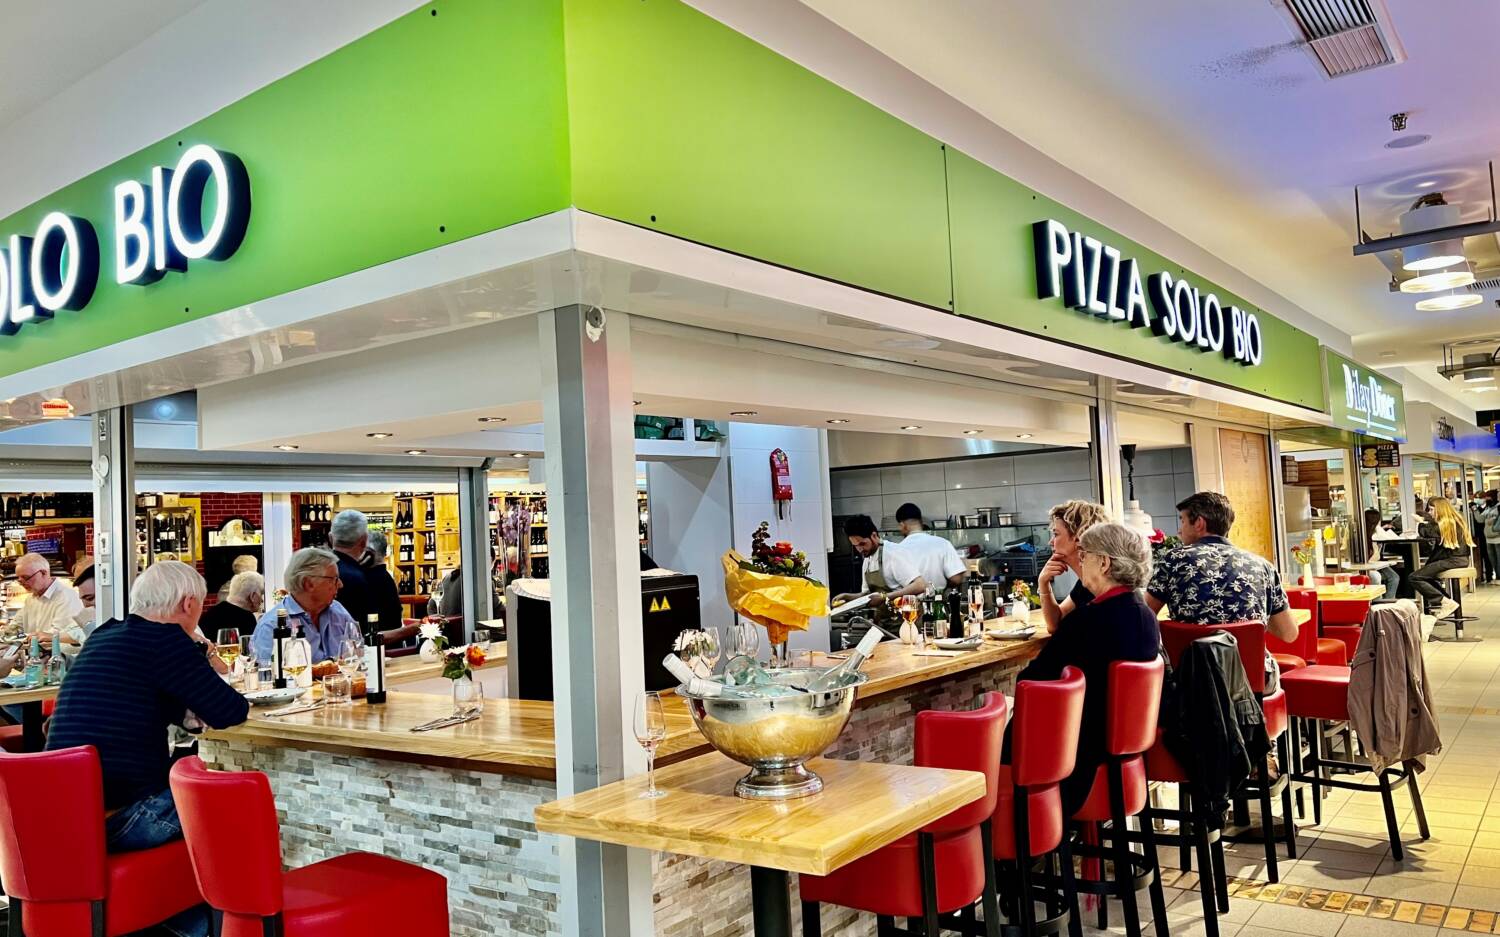 Das Restaurant Solo Bio bietet nachhaltige Italo-Küche im Mercado / ©Solo Bio